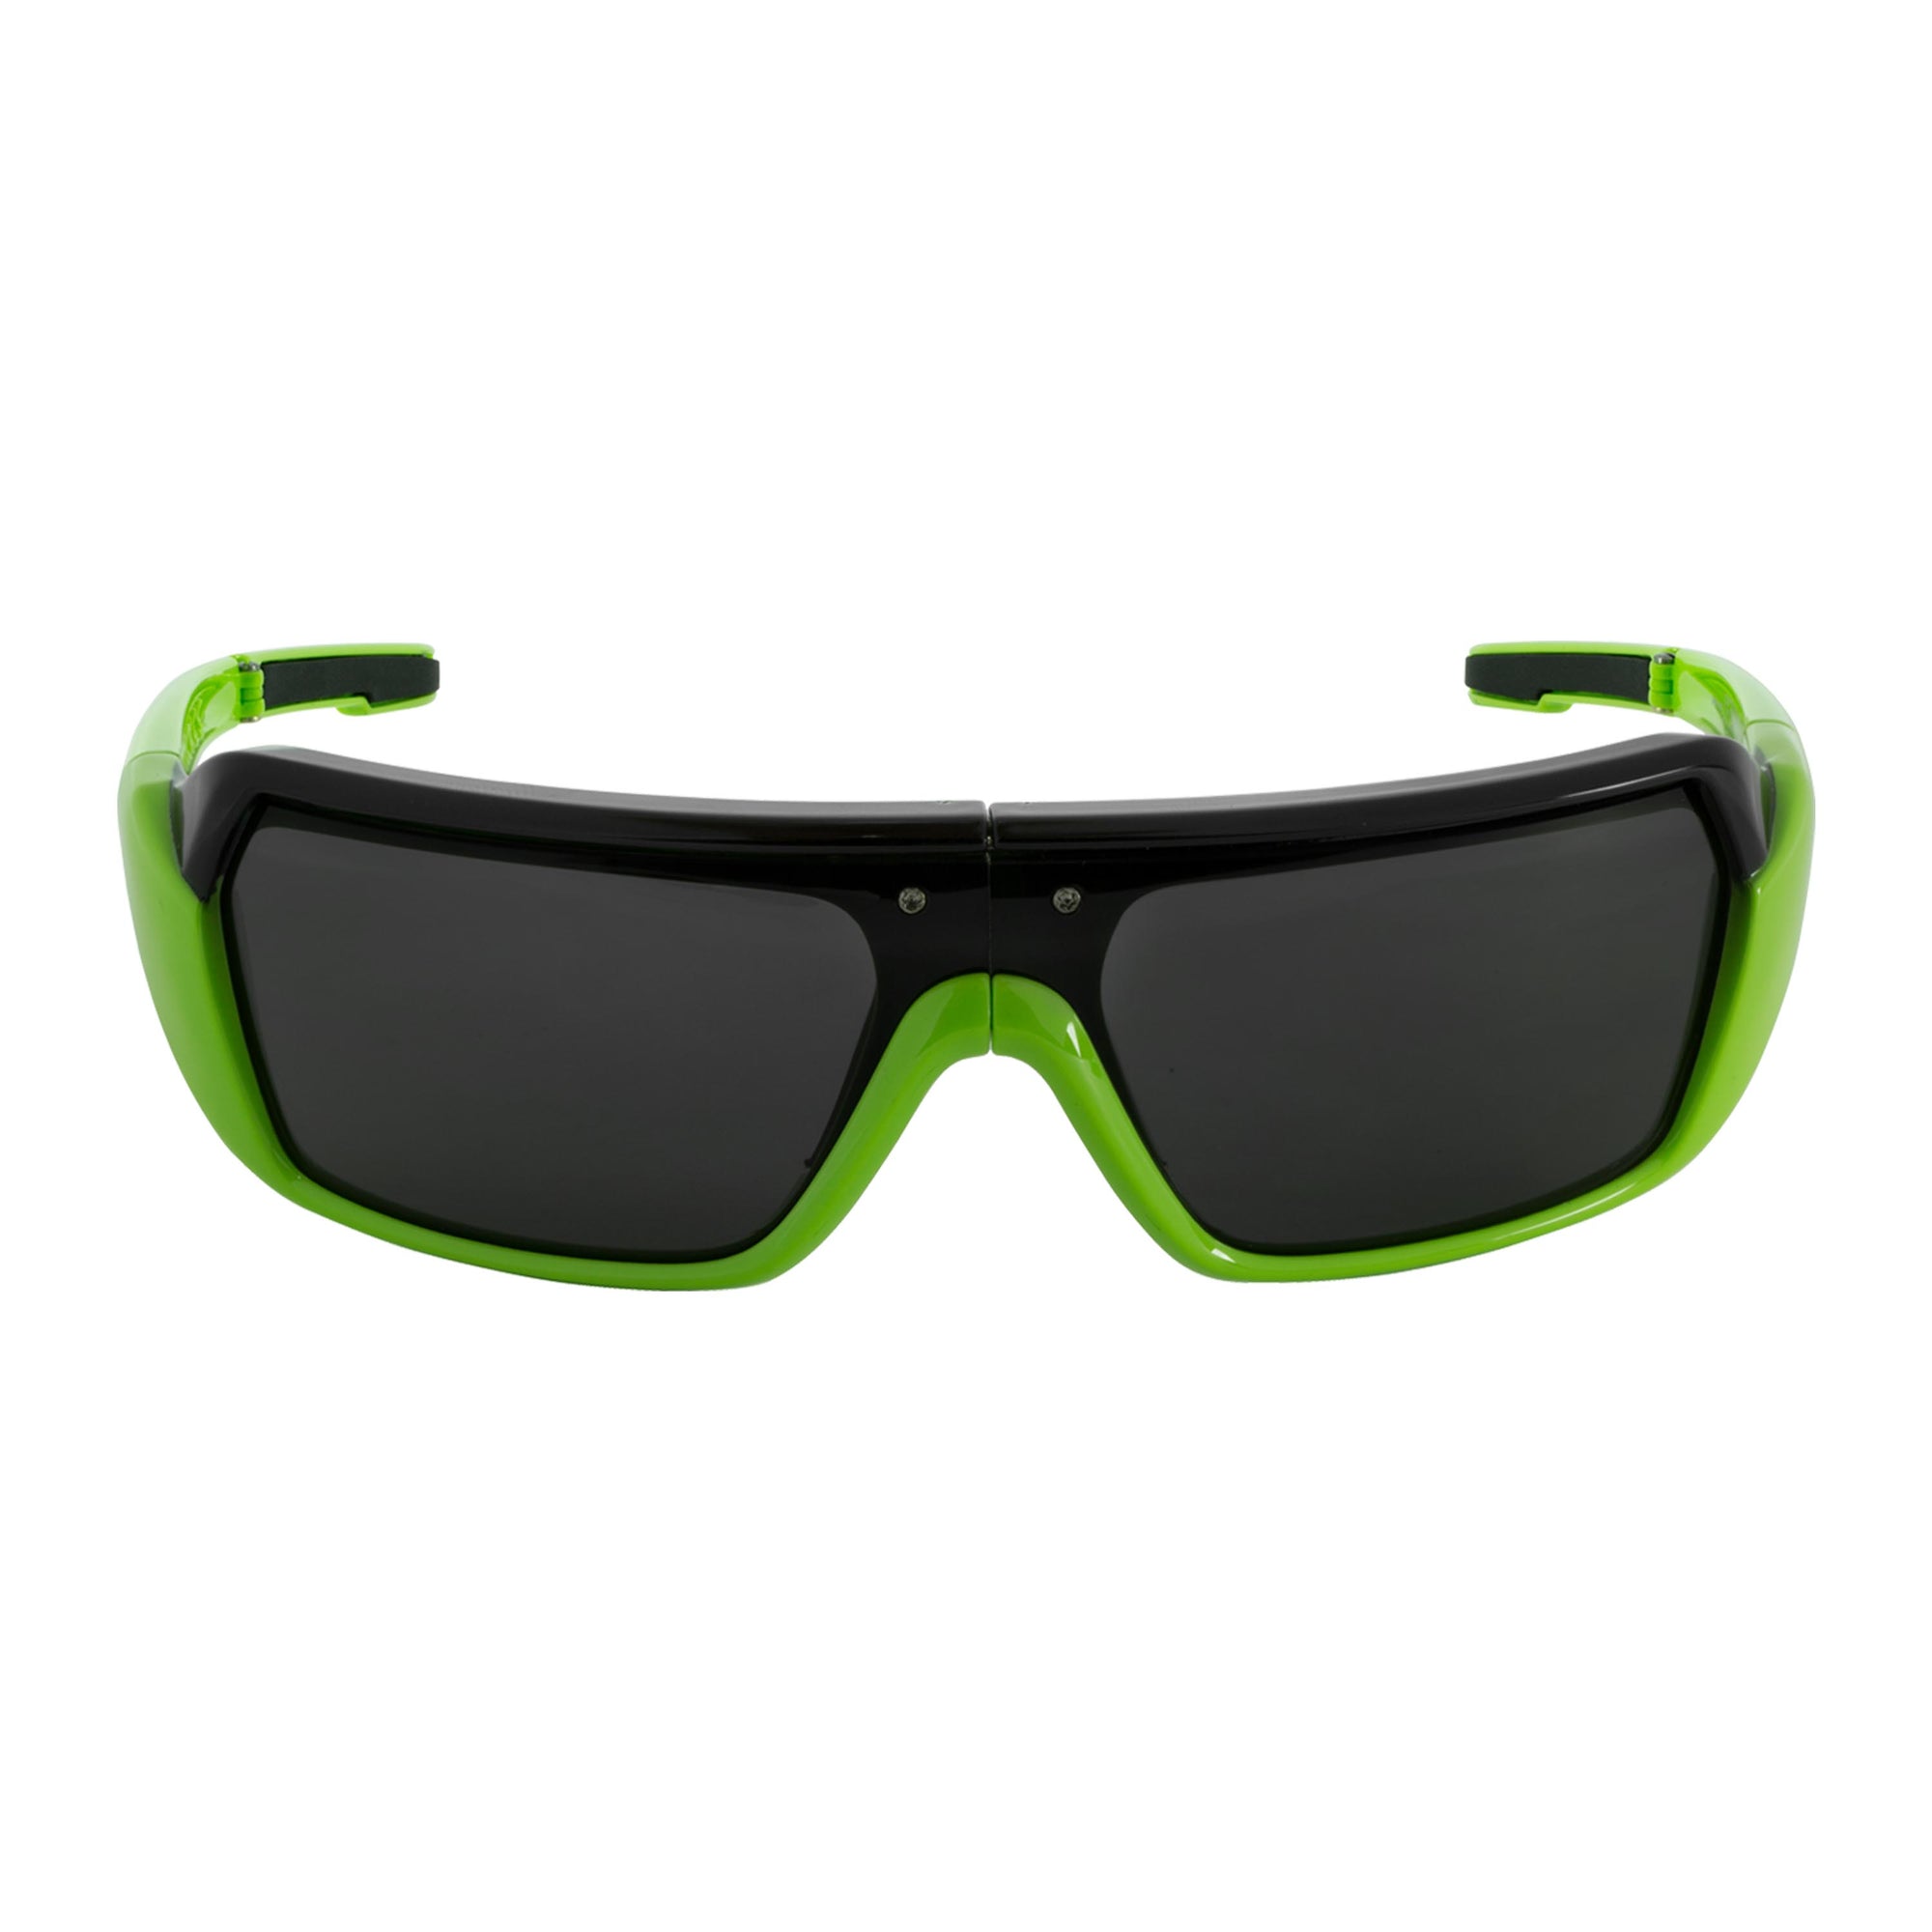 Popticals, Premium Compact Sunglasses, PopStorm, 010060-EBGP, Polarized Sunglasses, Gloss Black/Green Frame, Gray Lenses, Front View